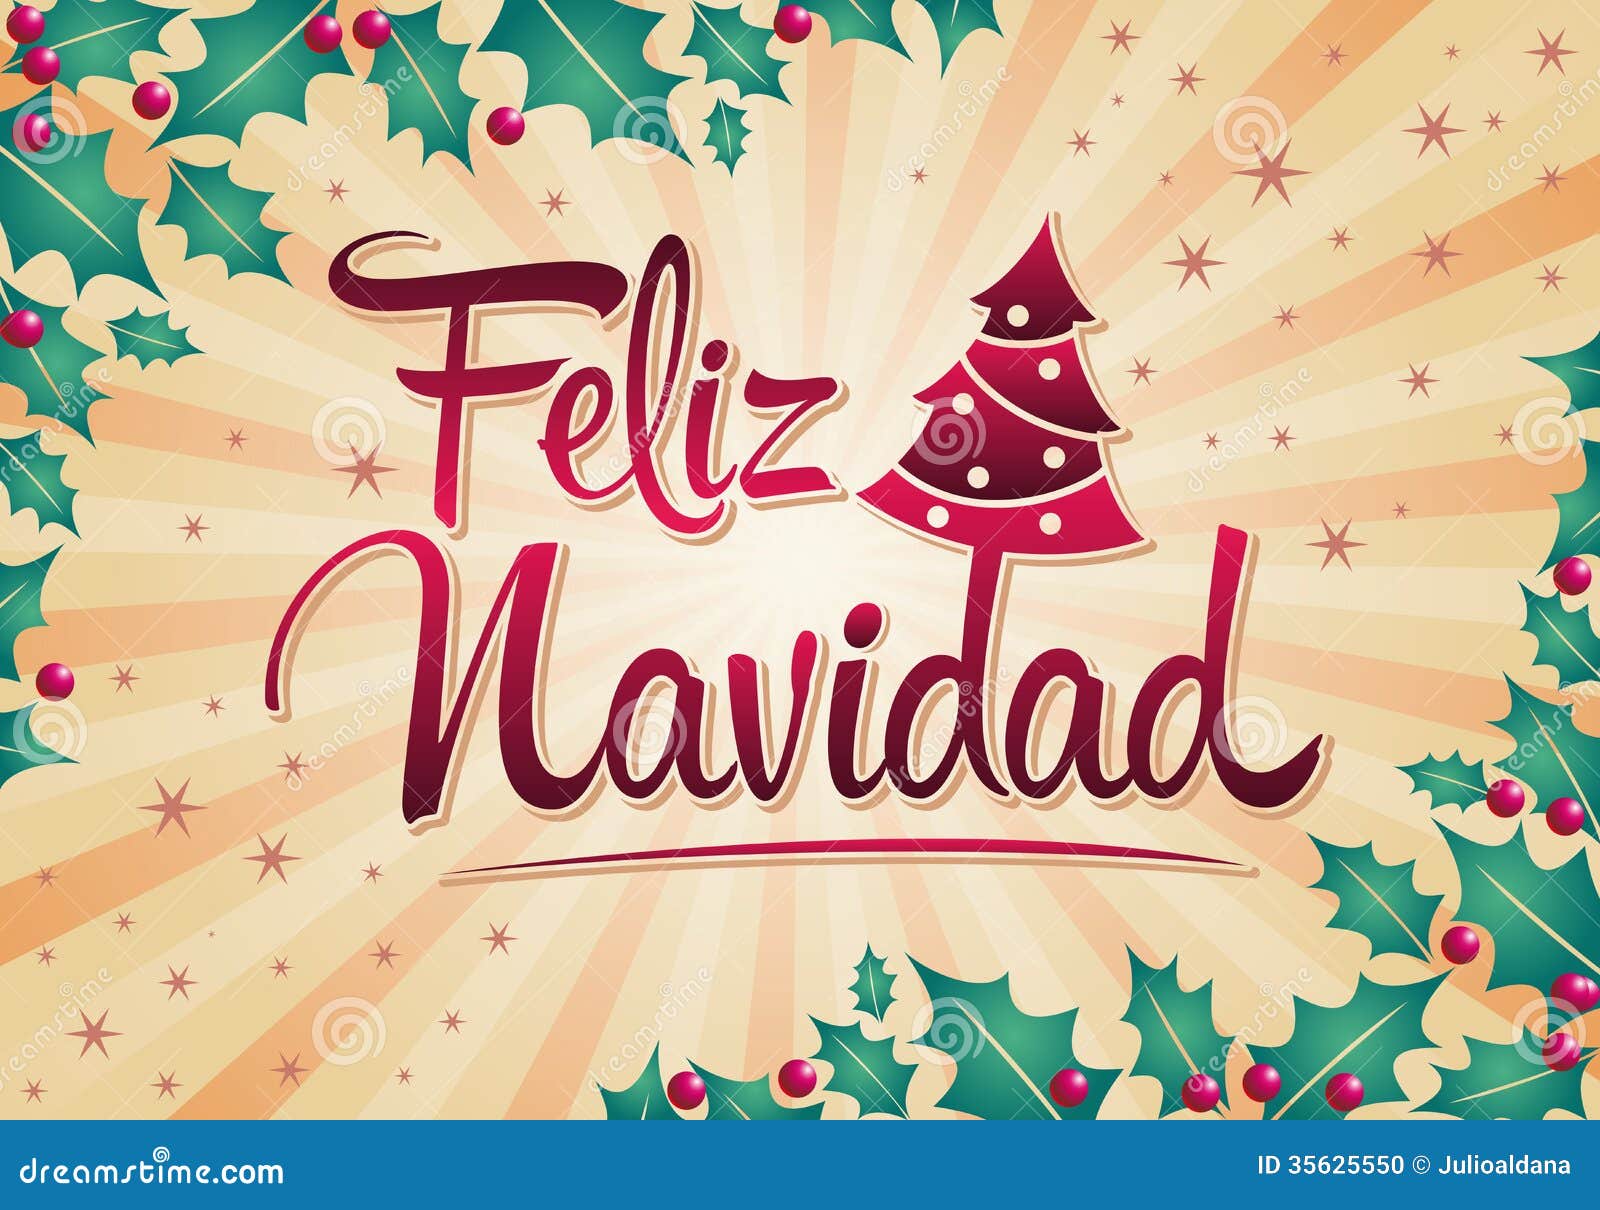 feliz-navidad-merry-christmas-spanish-text-vector-christmas-tree-35625550.jpg